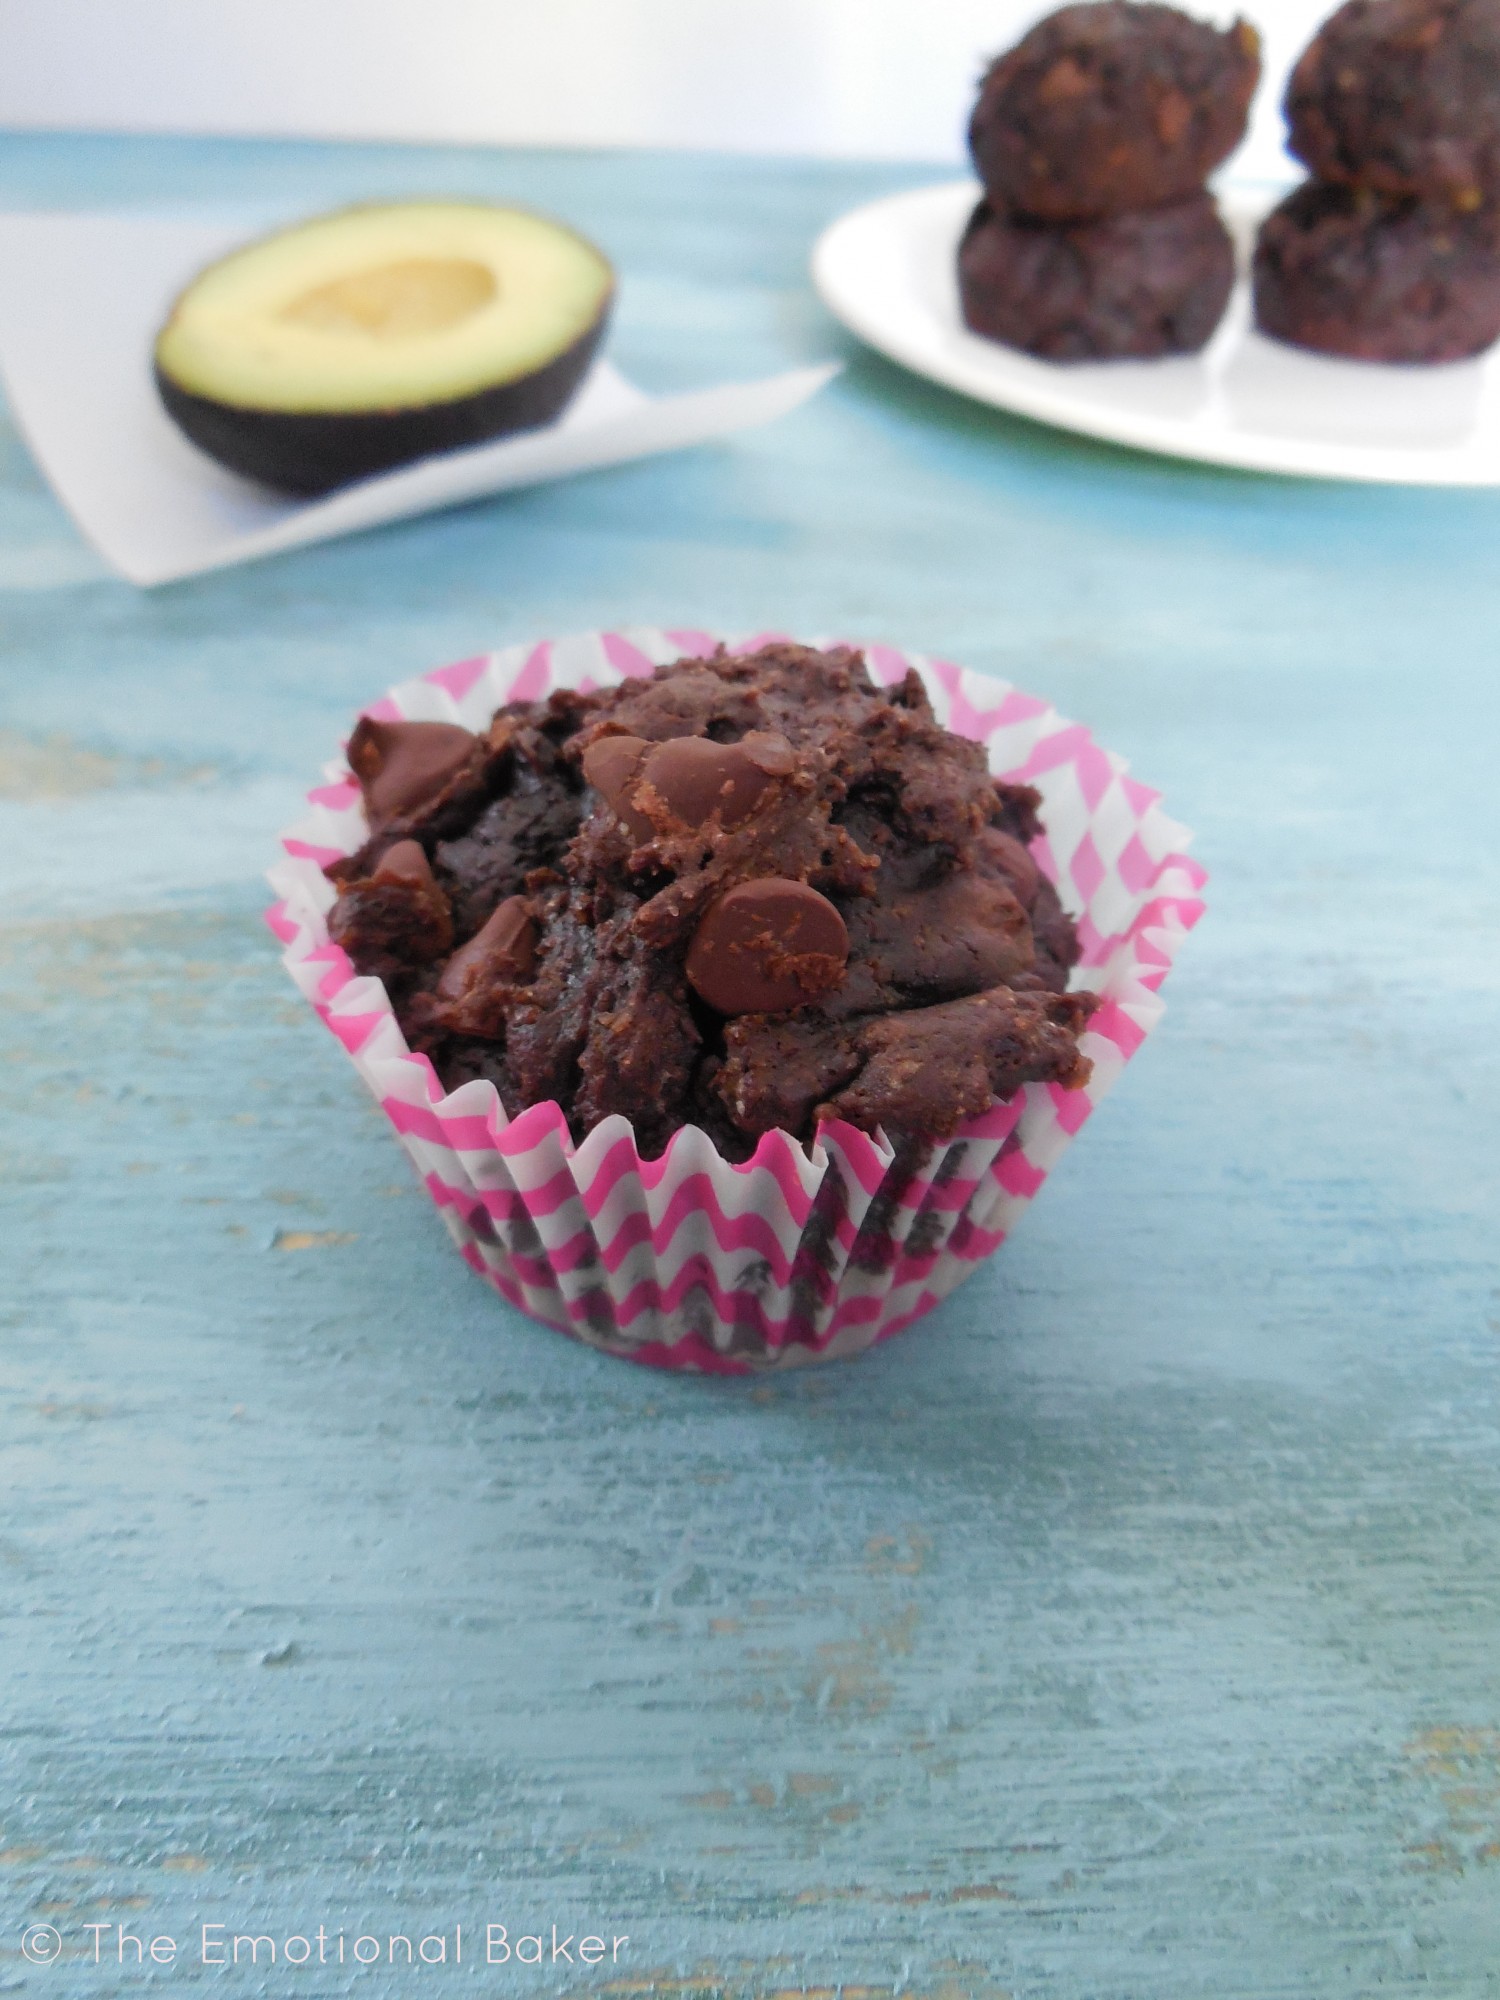 Chocolate Avocado Muffins